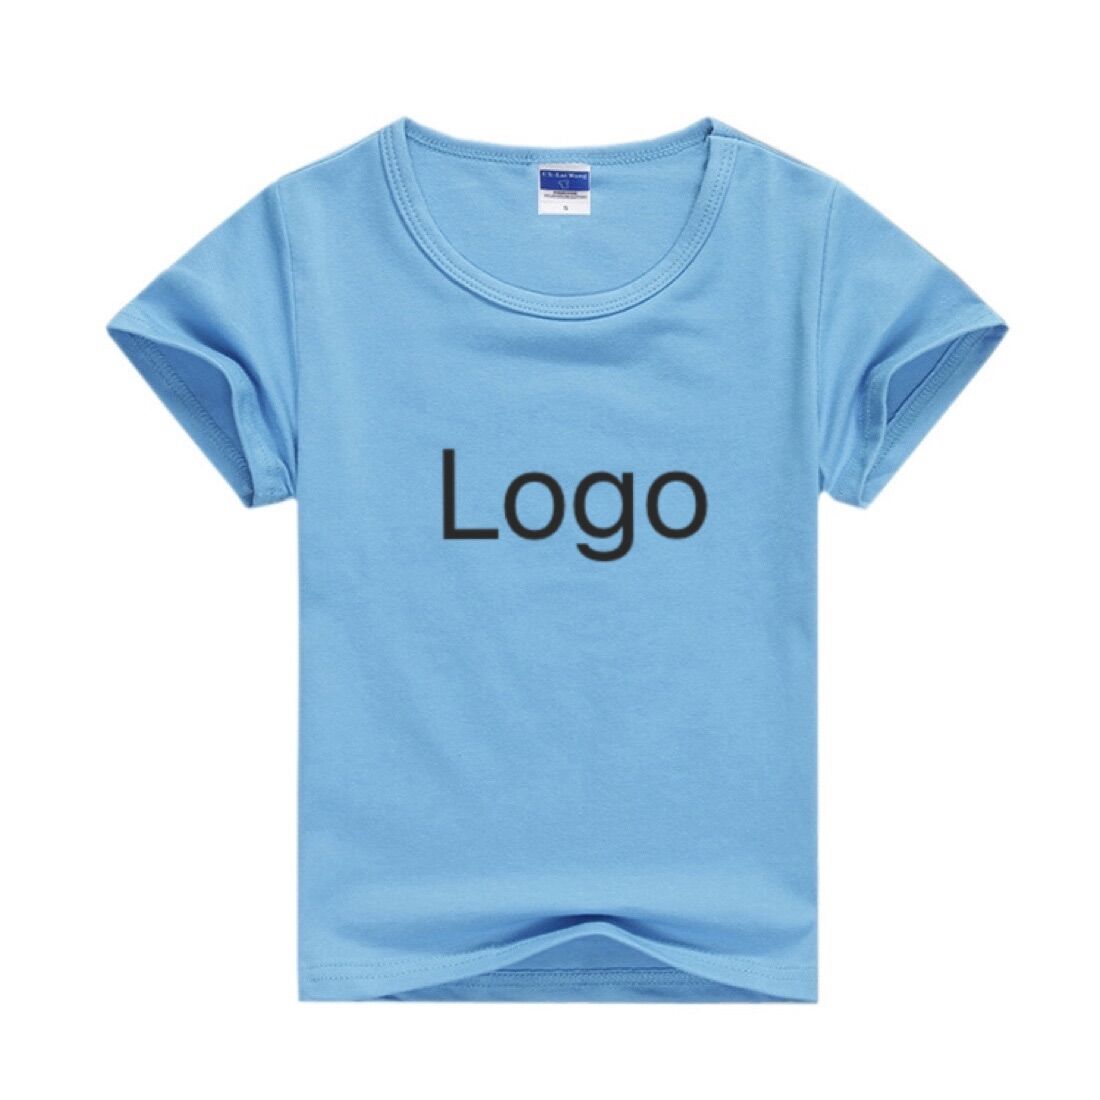 logo customize kids sublimation t shirt pastel cotton t shirt kids blank shirts